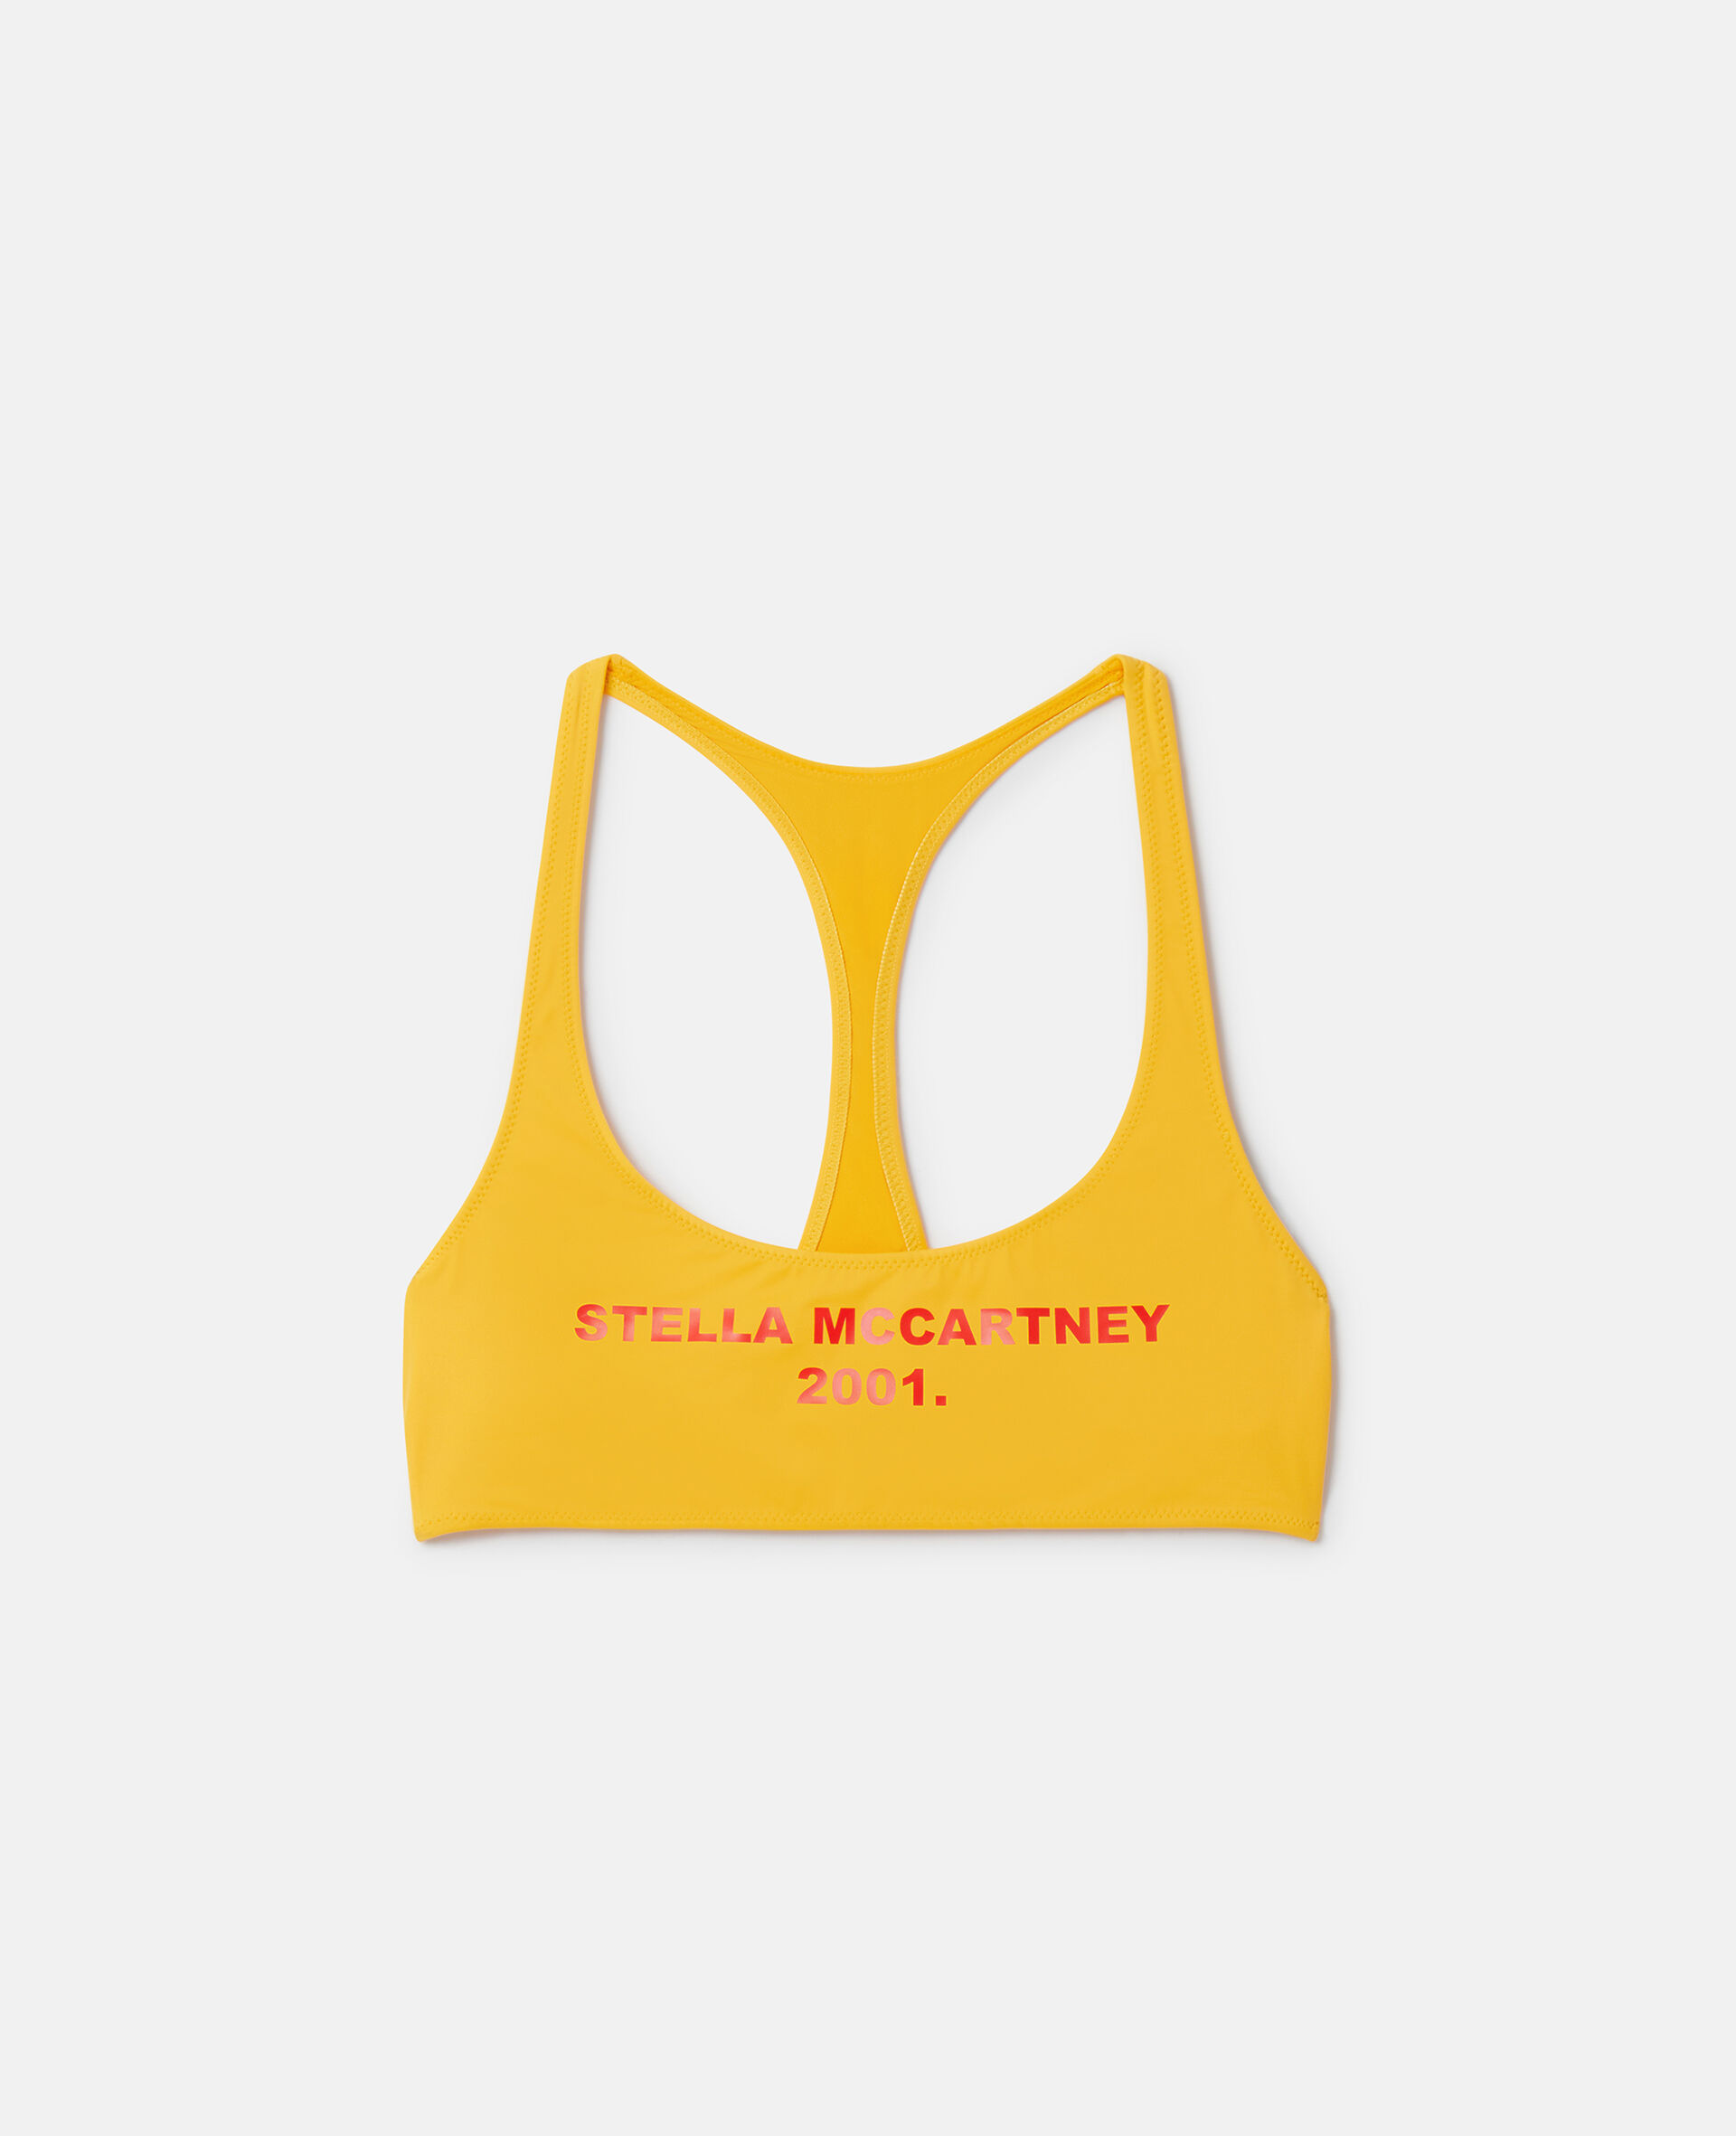 Stella McCartney 2001. Print Bikini Top-Yellow-medium